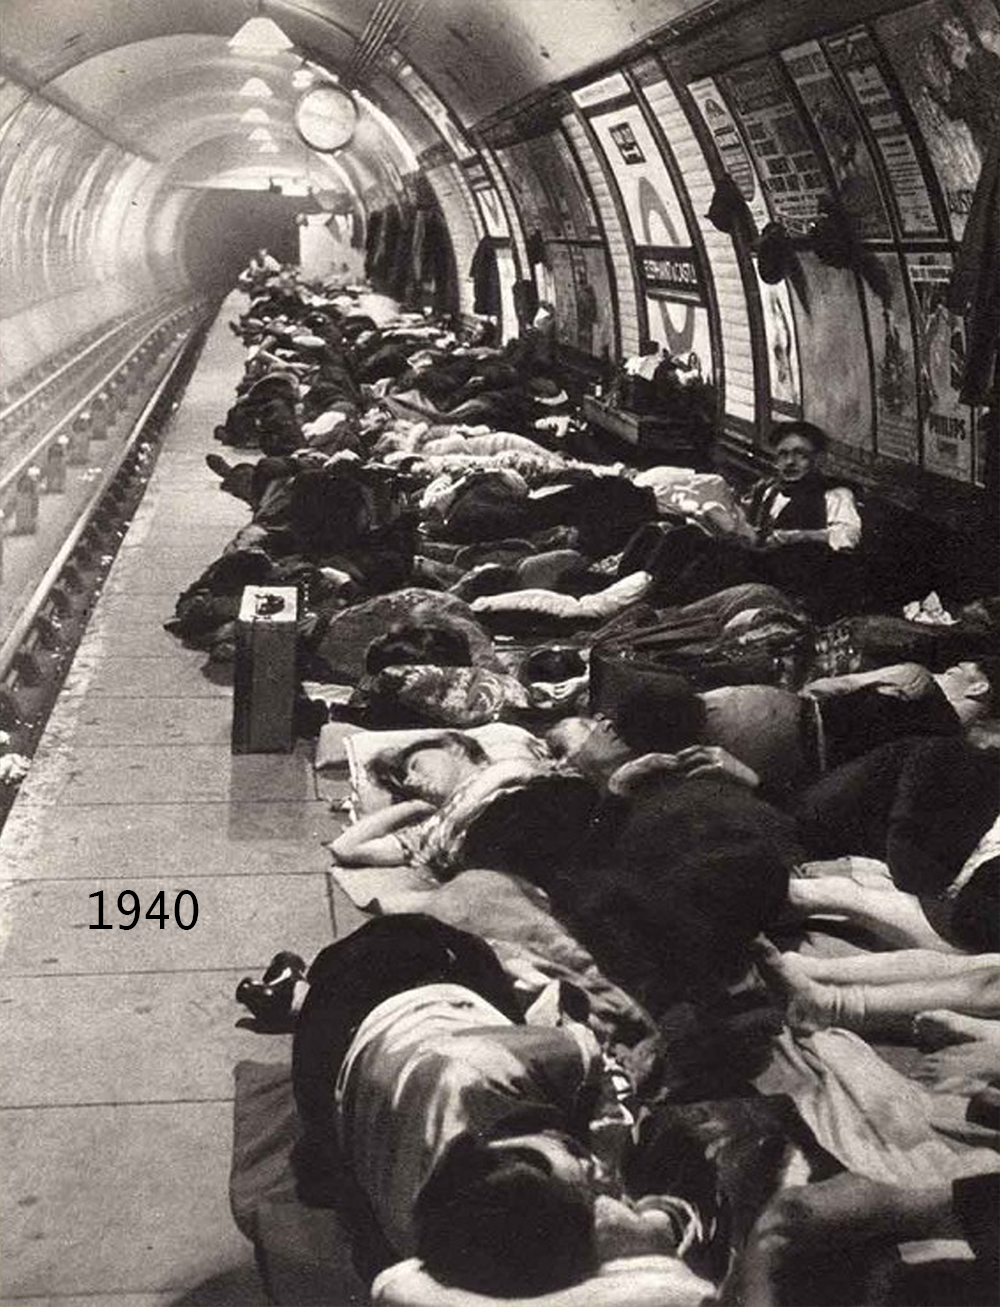 Sleeping in Tube Station